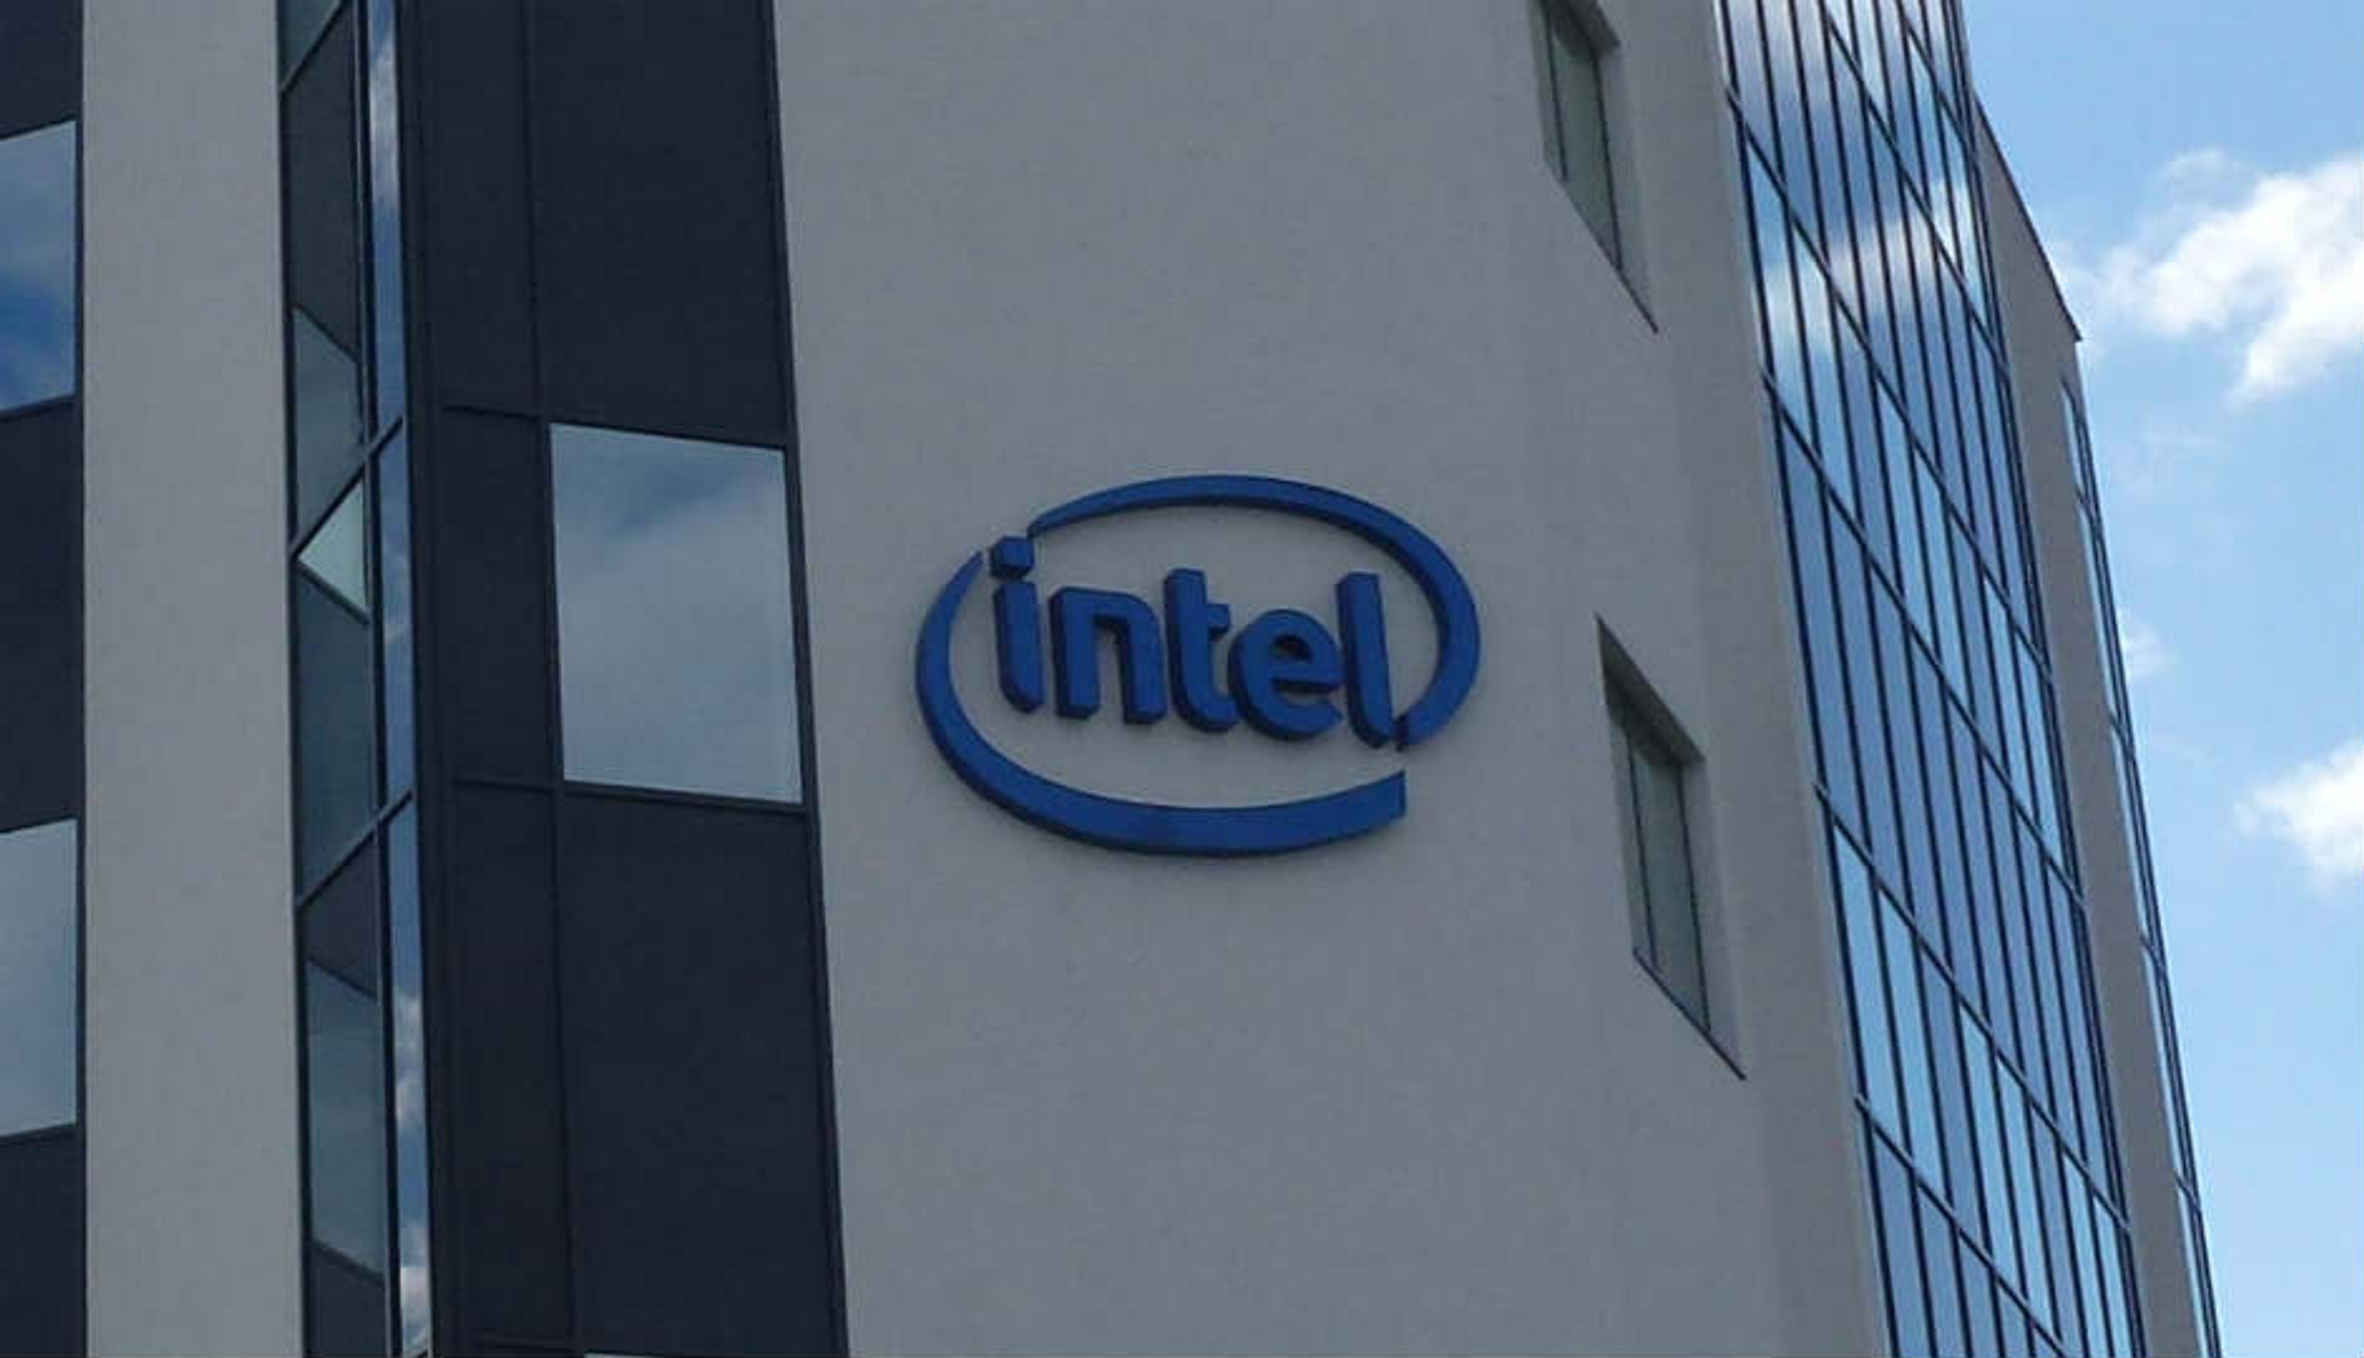 Кабинет интел. Офис Интел в Москве. Офис Интел в США. Здание Интел. Офис Intel в Москве.